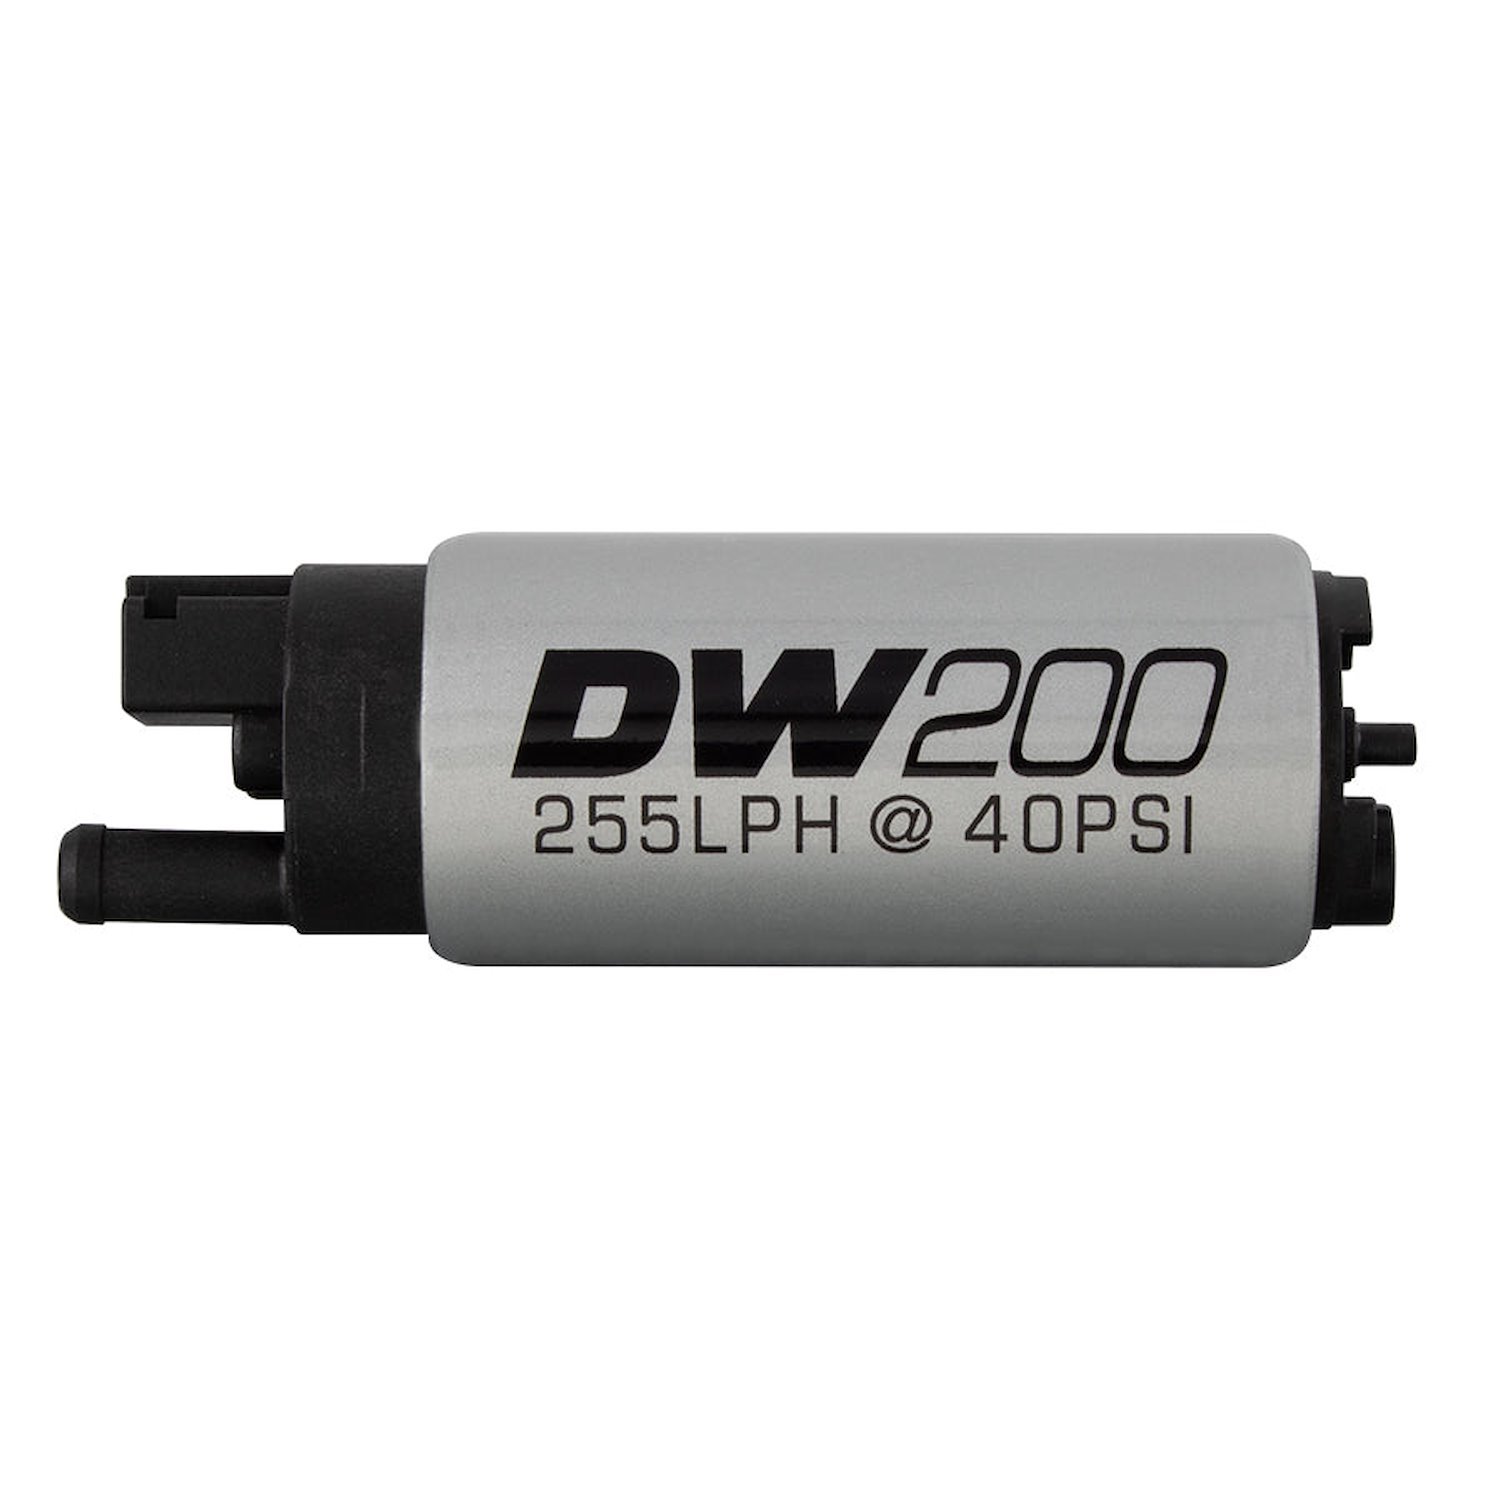 9201 DW200 series 255lph in-tank fuel pump